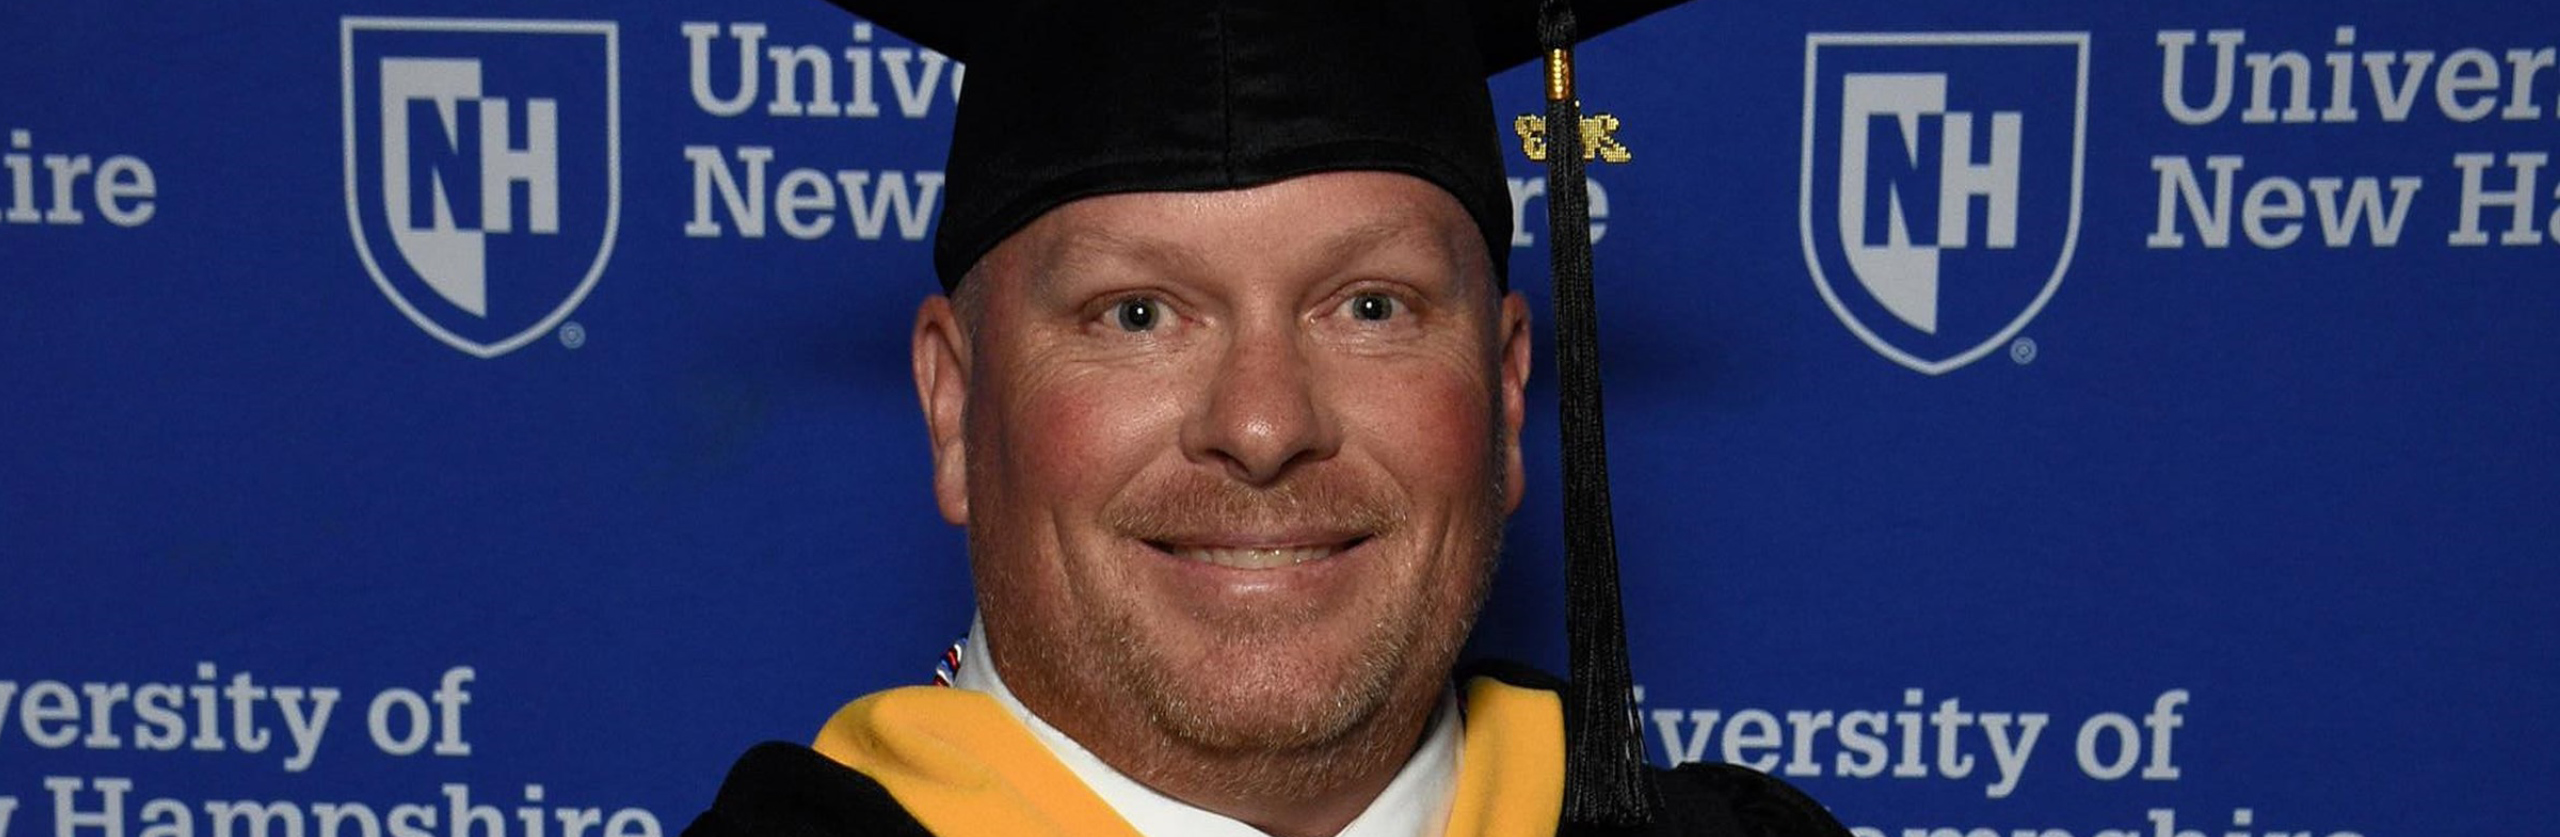 A close up of a man wearing a graduate cap